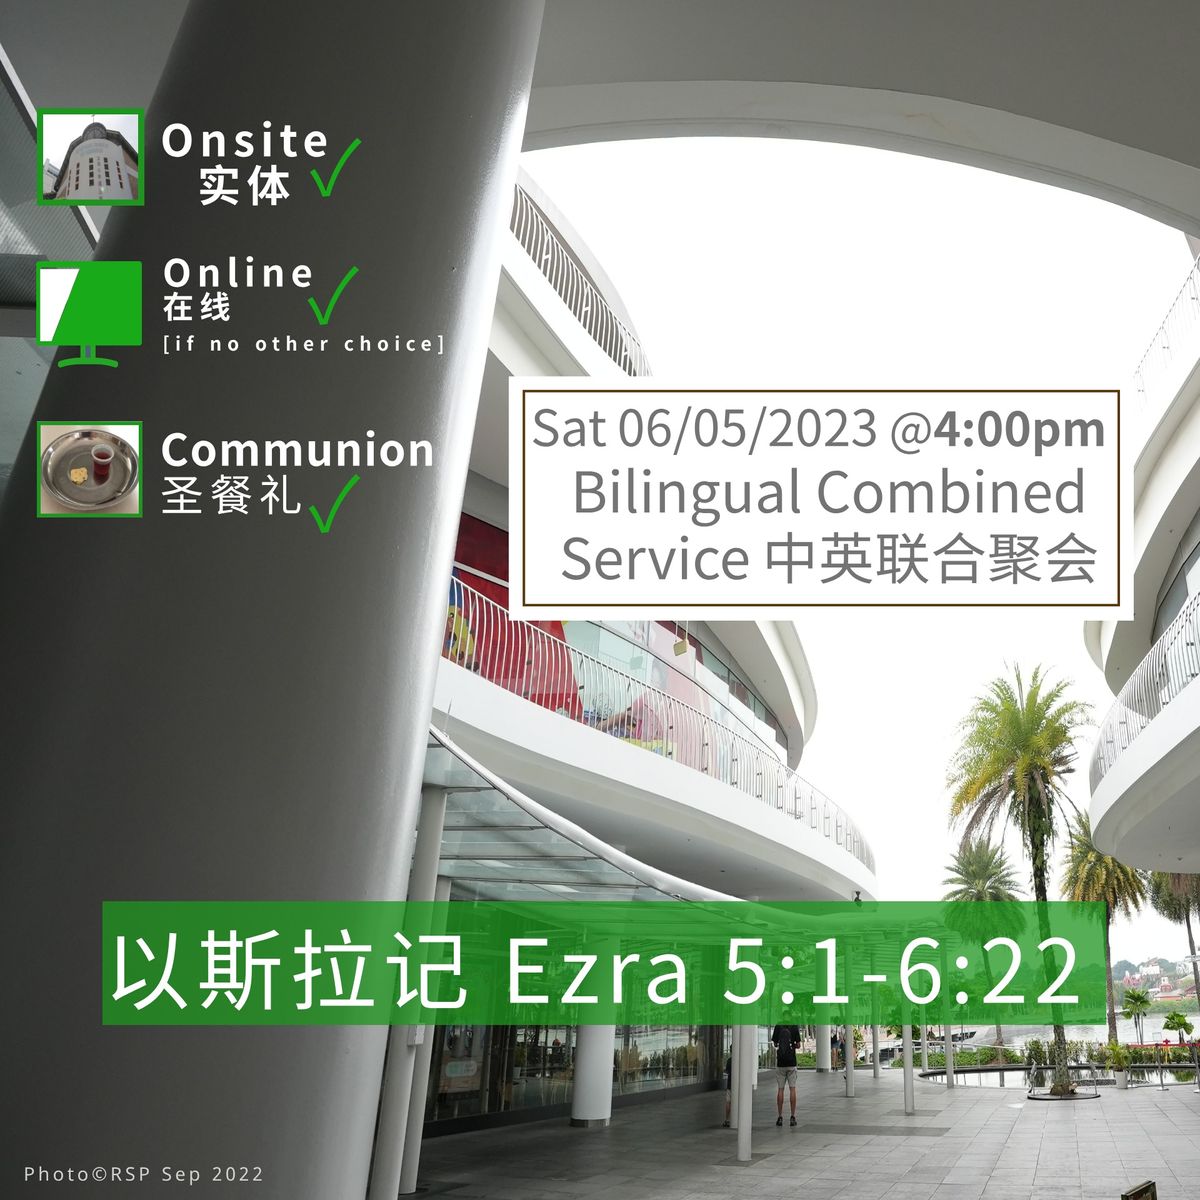 Sat 06/05/2023 @4:00pm Combined Worship Service 联合崇拜聚会.